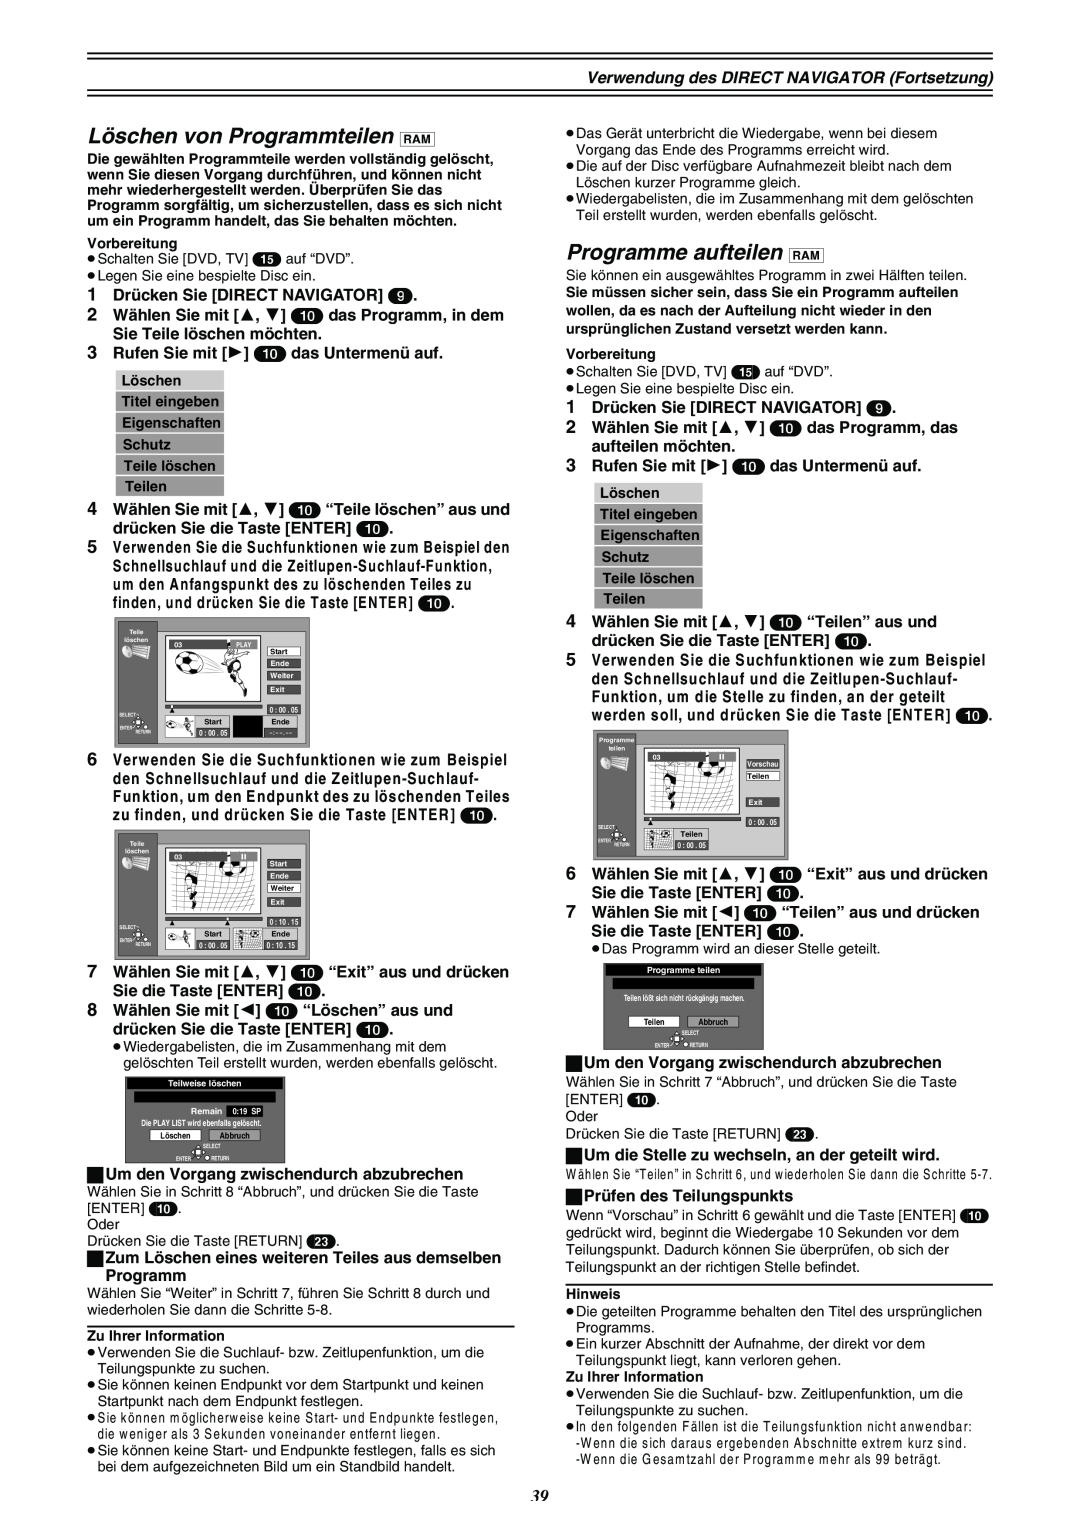 Panasonic DMR-E30 manual Löschen von Programmteilen RAM, Programme aufteilen RAM, Löschen Abbruch, Teilen 